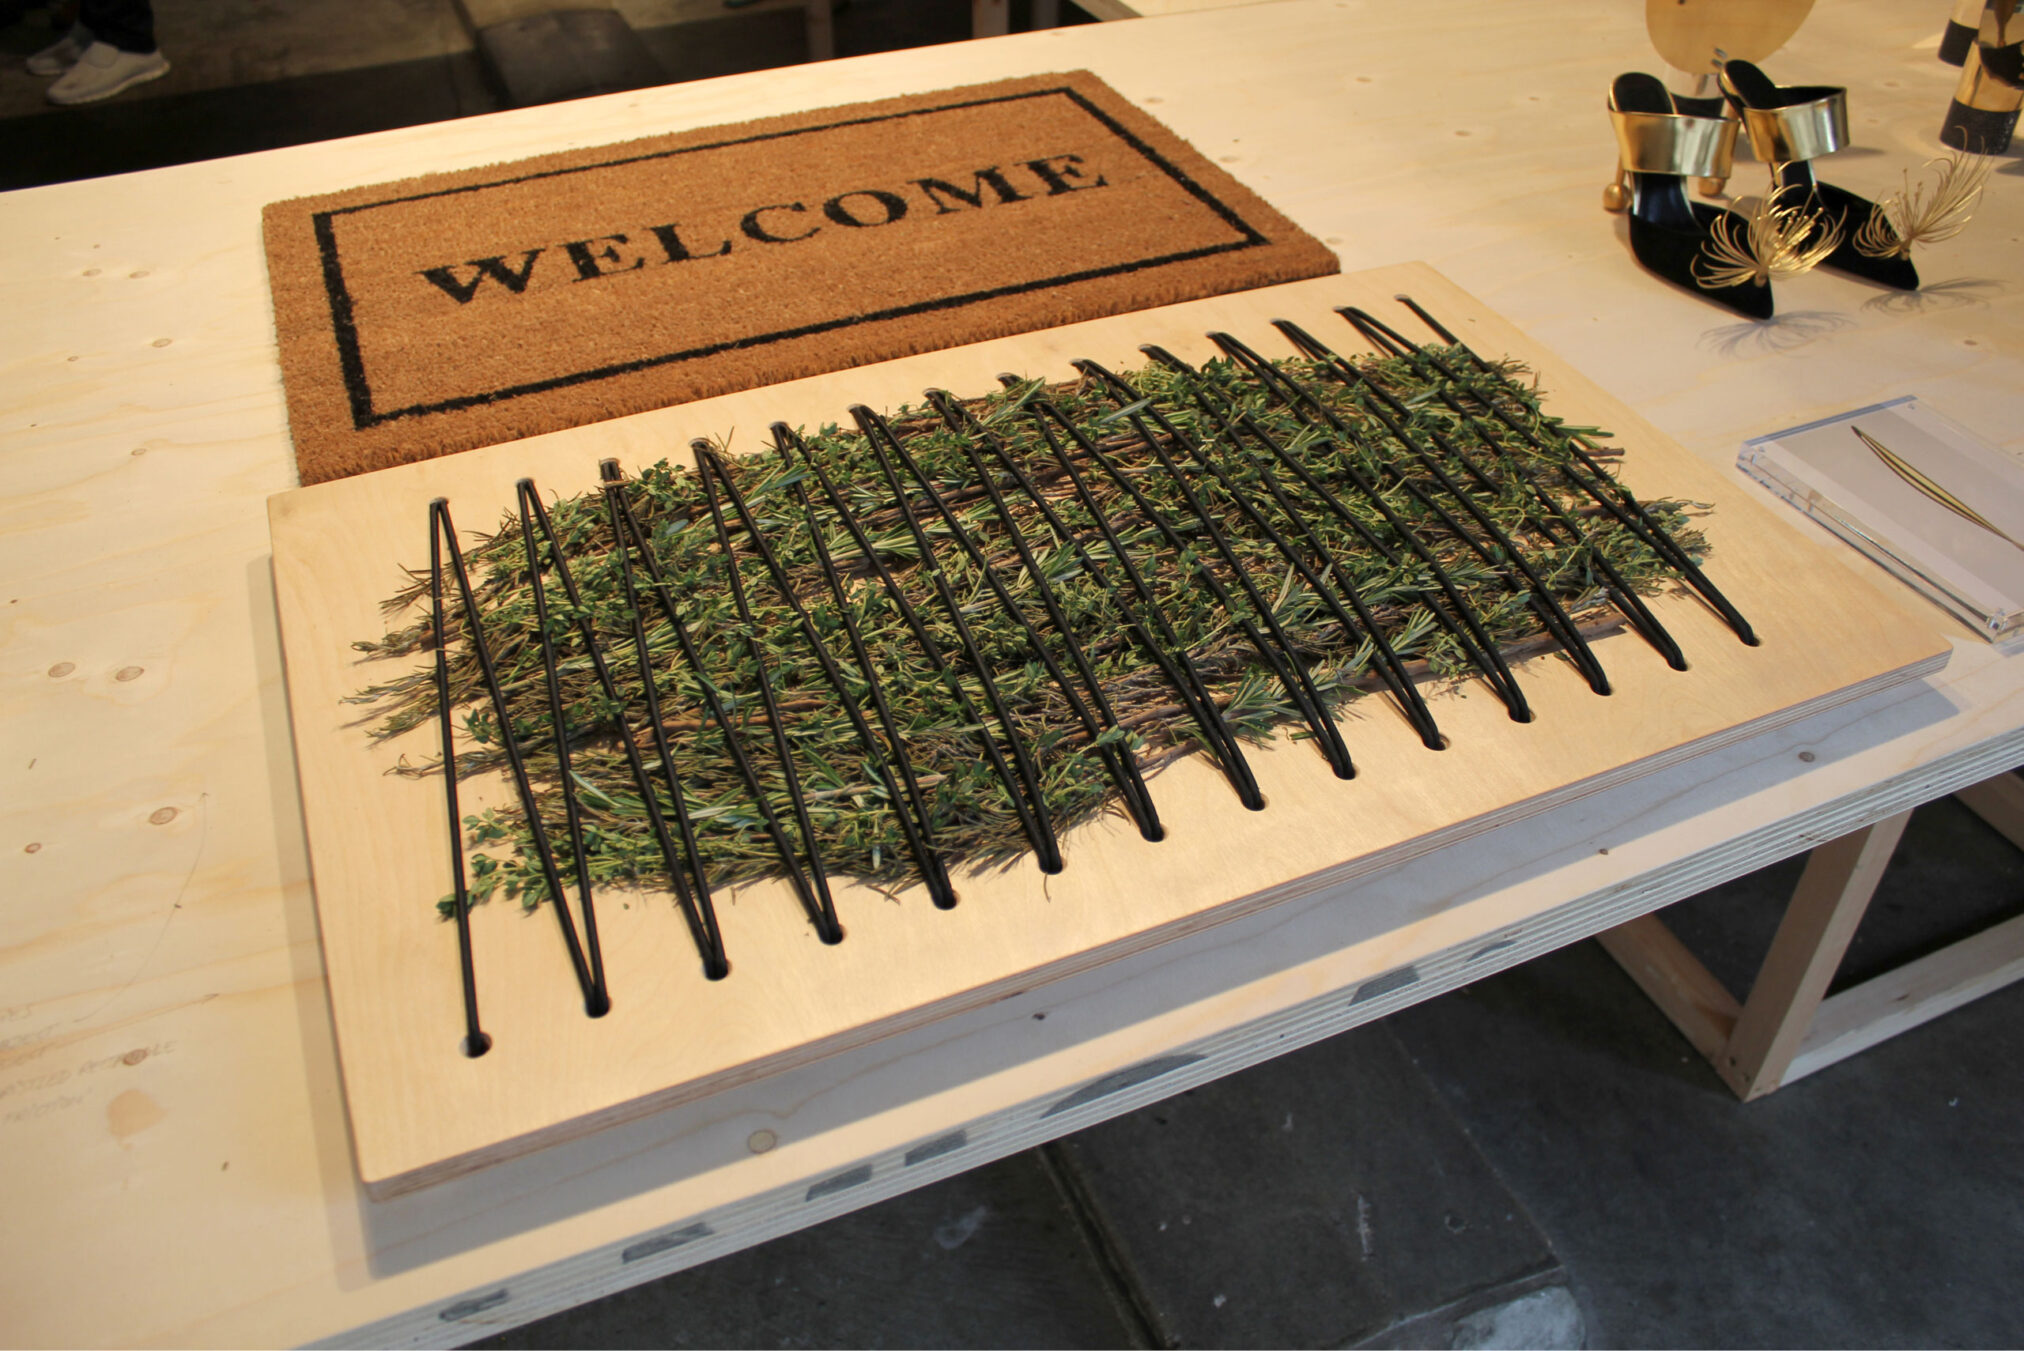 Herbal Doormat by Heka London, sensory design studio